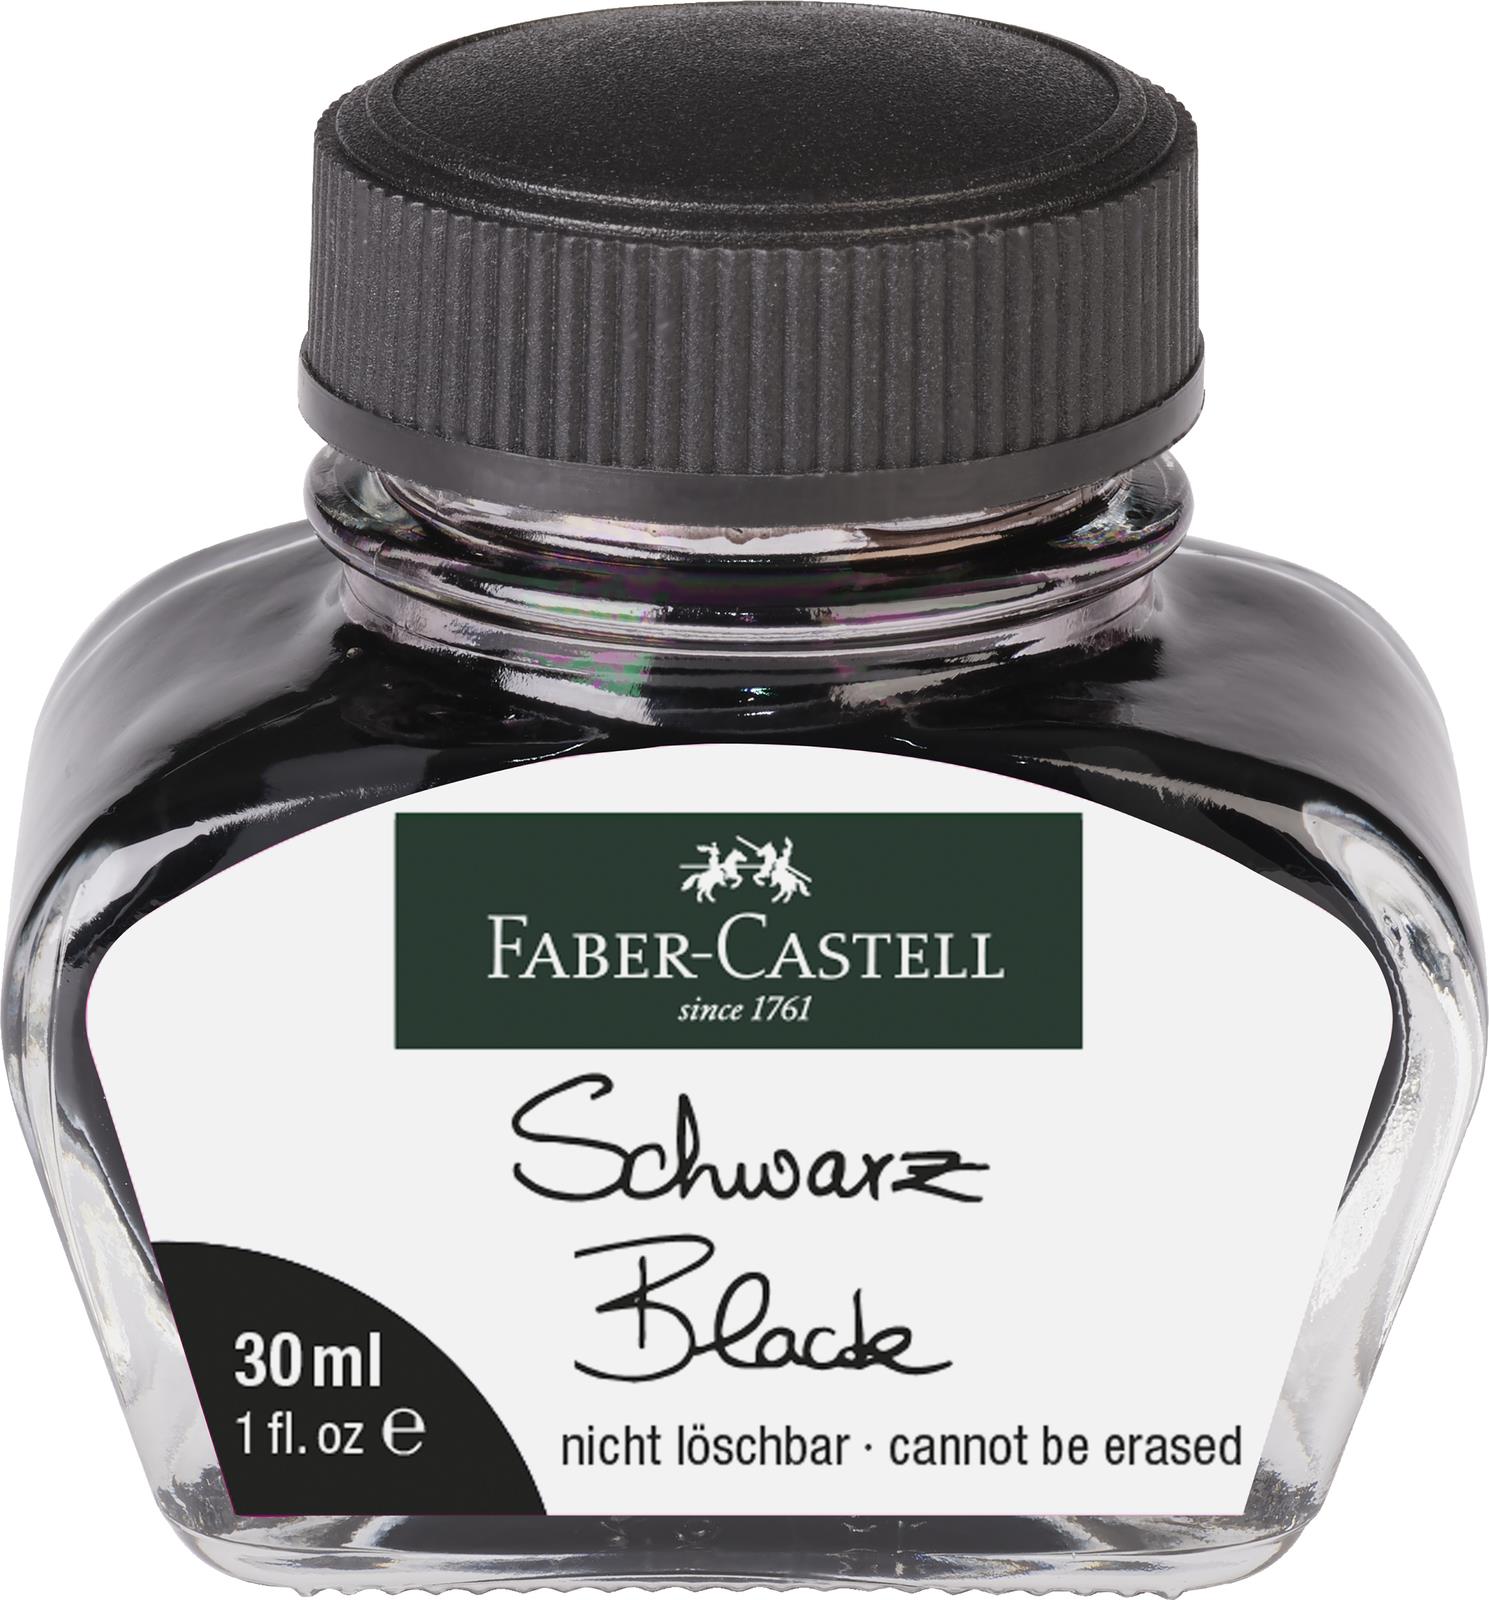 Faber-Castell: Fountain Pen Ink Bottle - Black (30ml)